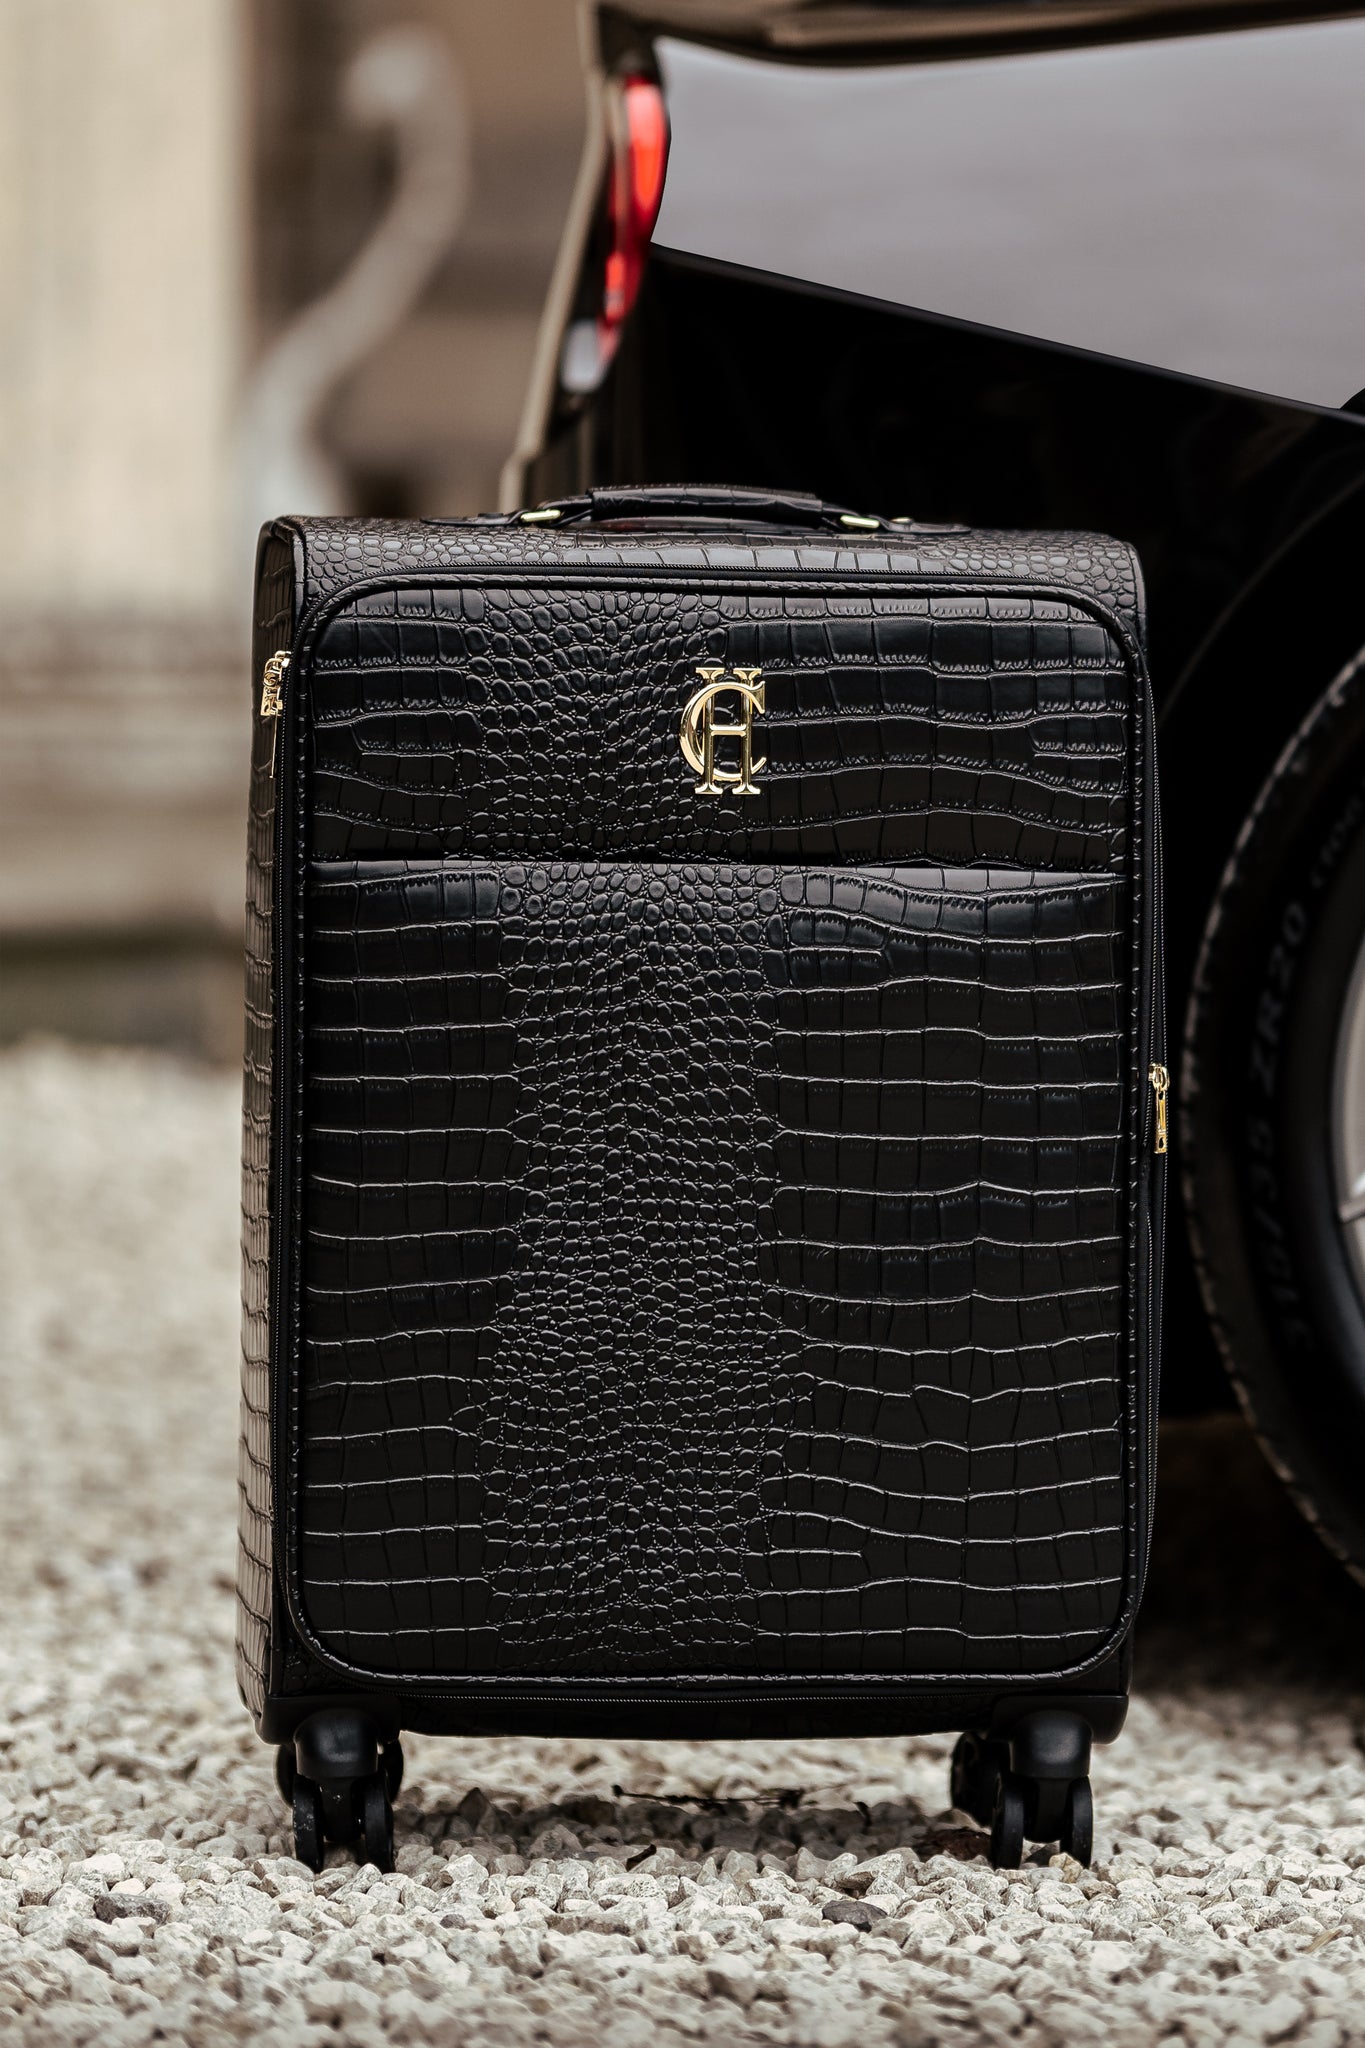 Knightsbridge Large Suitcase (Black Croc)